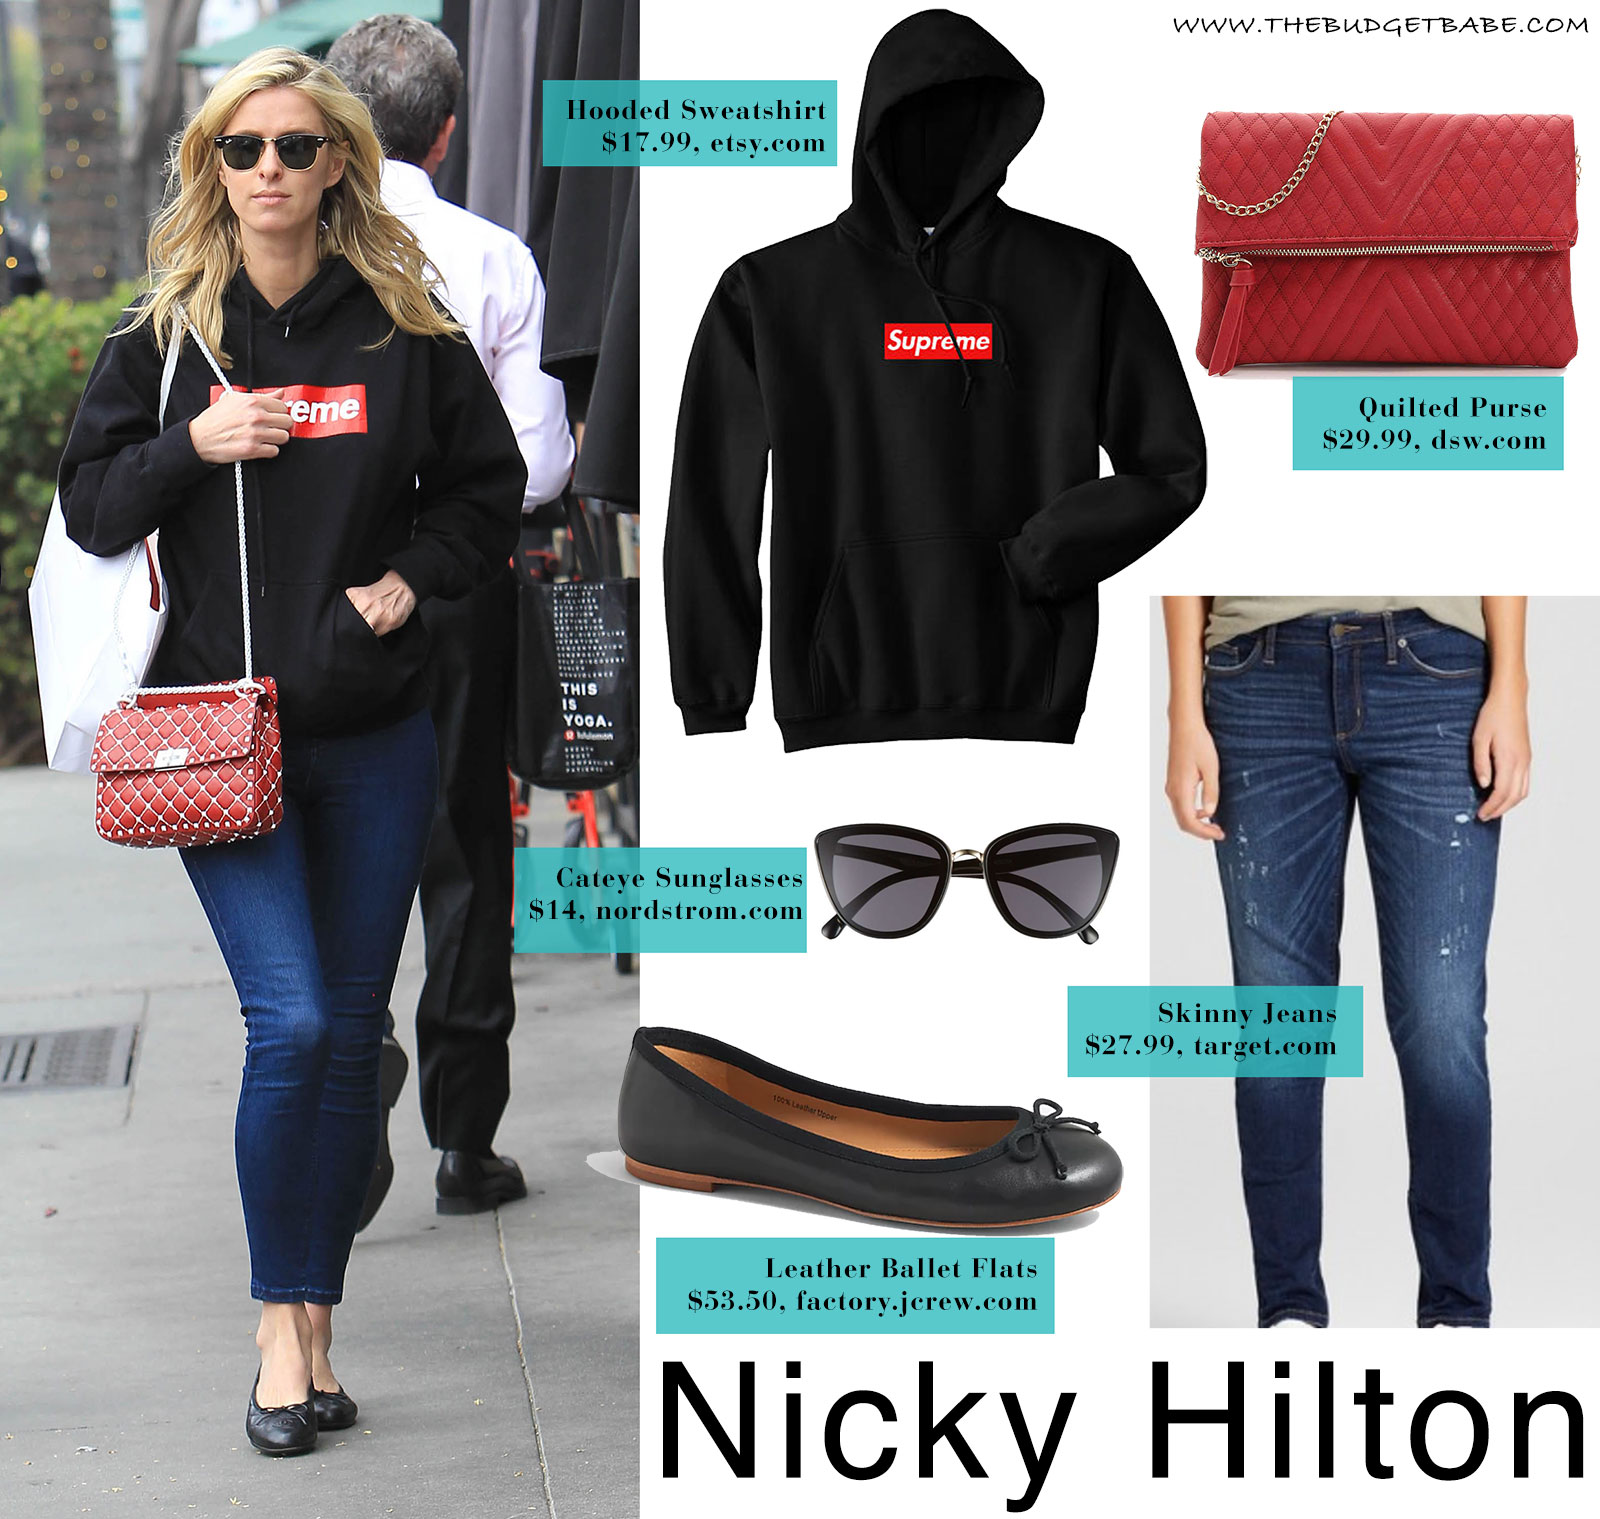 Nicky Hilton's Supreme sweatshirt and Valentino bag look for less